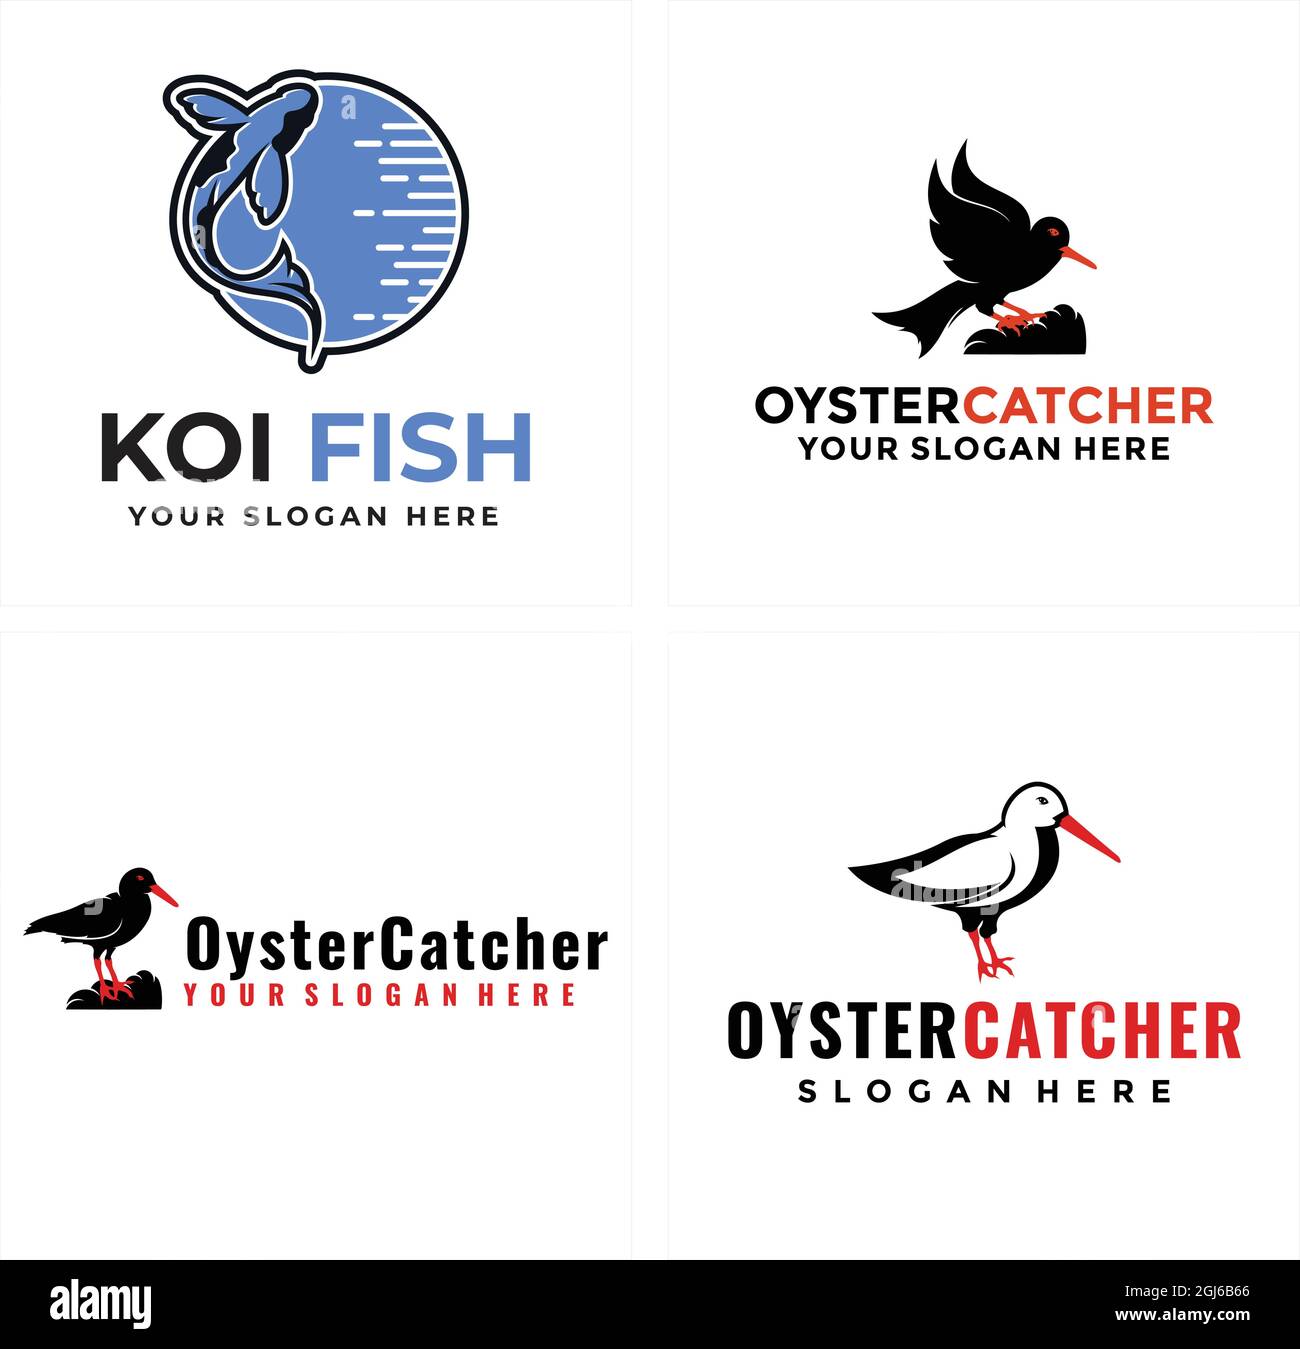 Animal koi fish and oyster catcher vector logo design Stock Vector